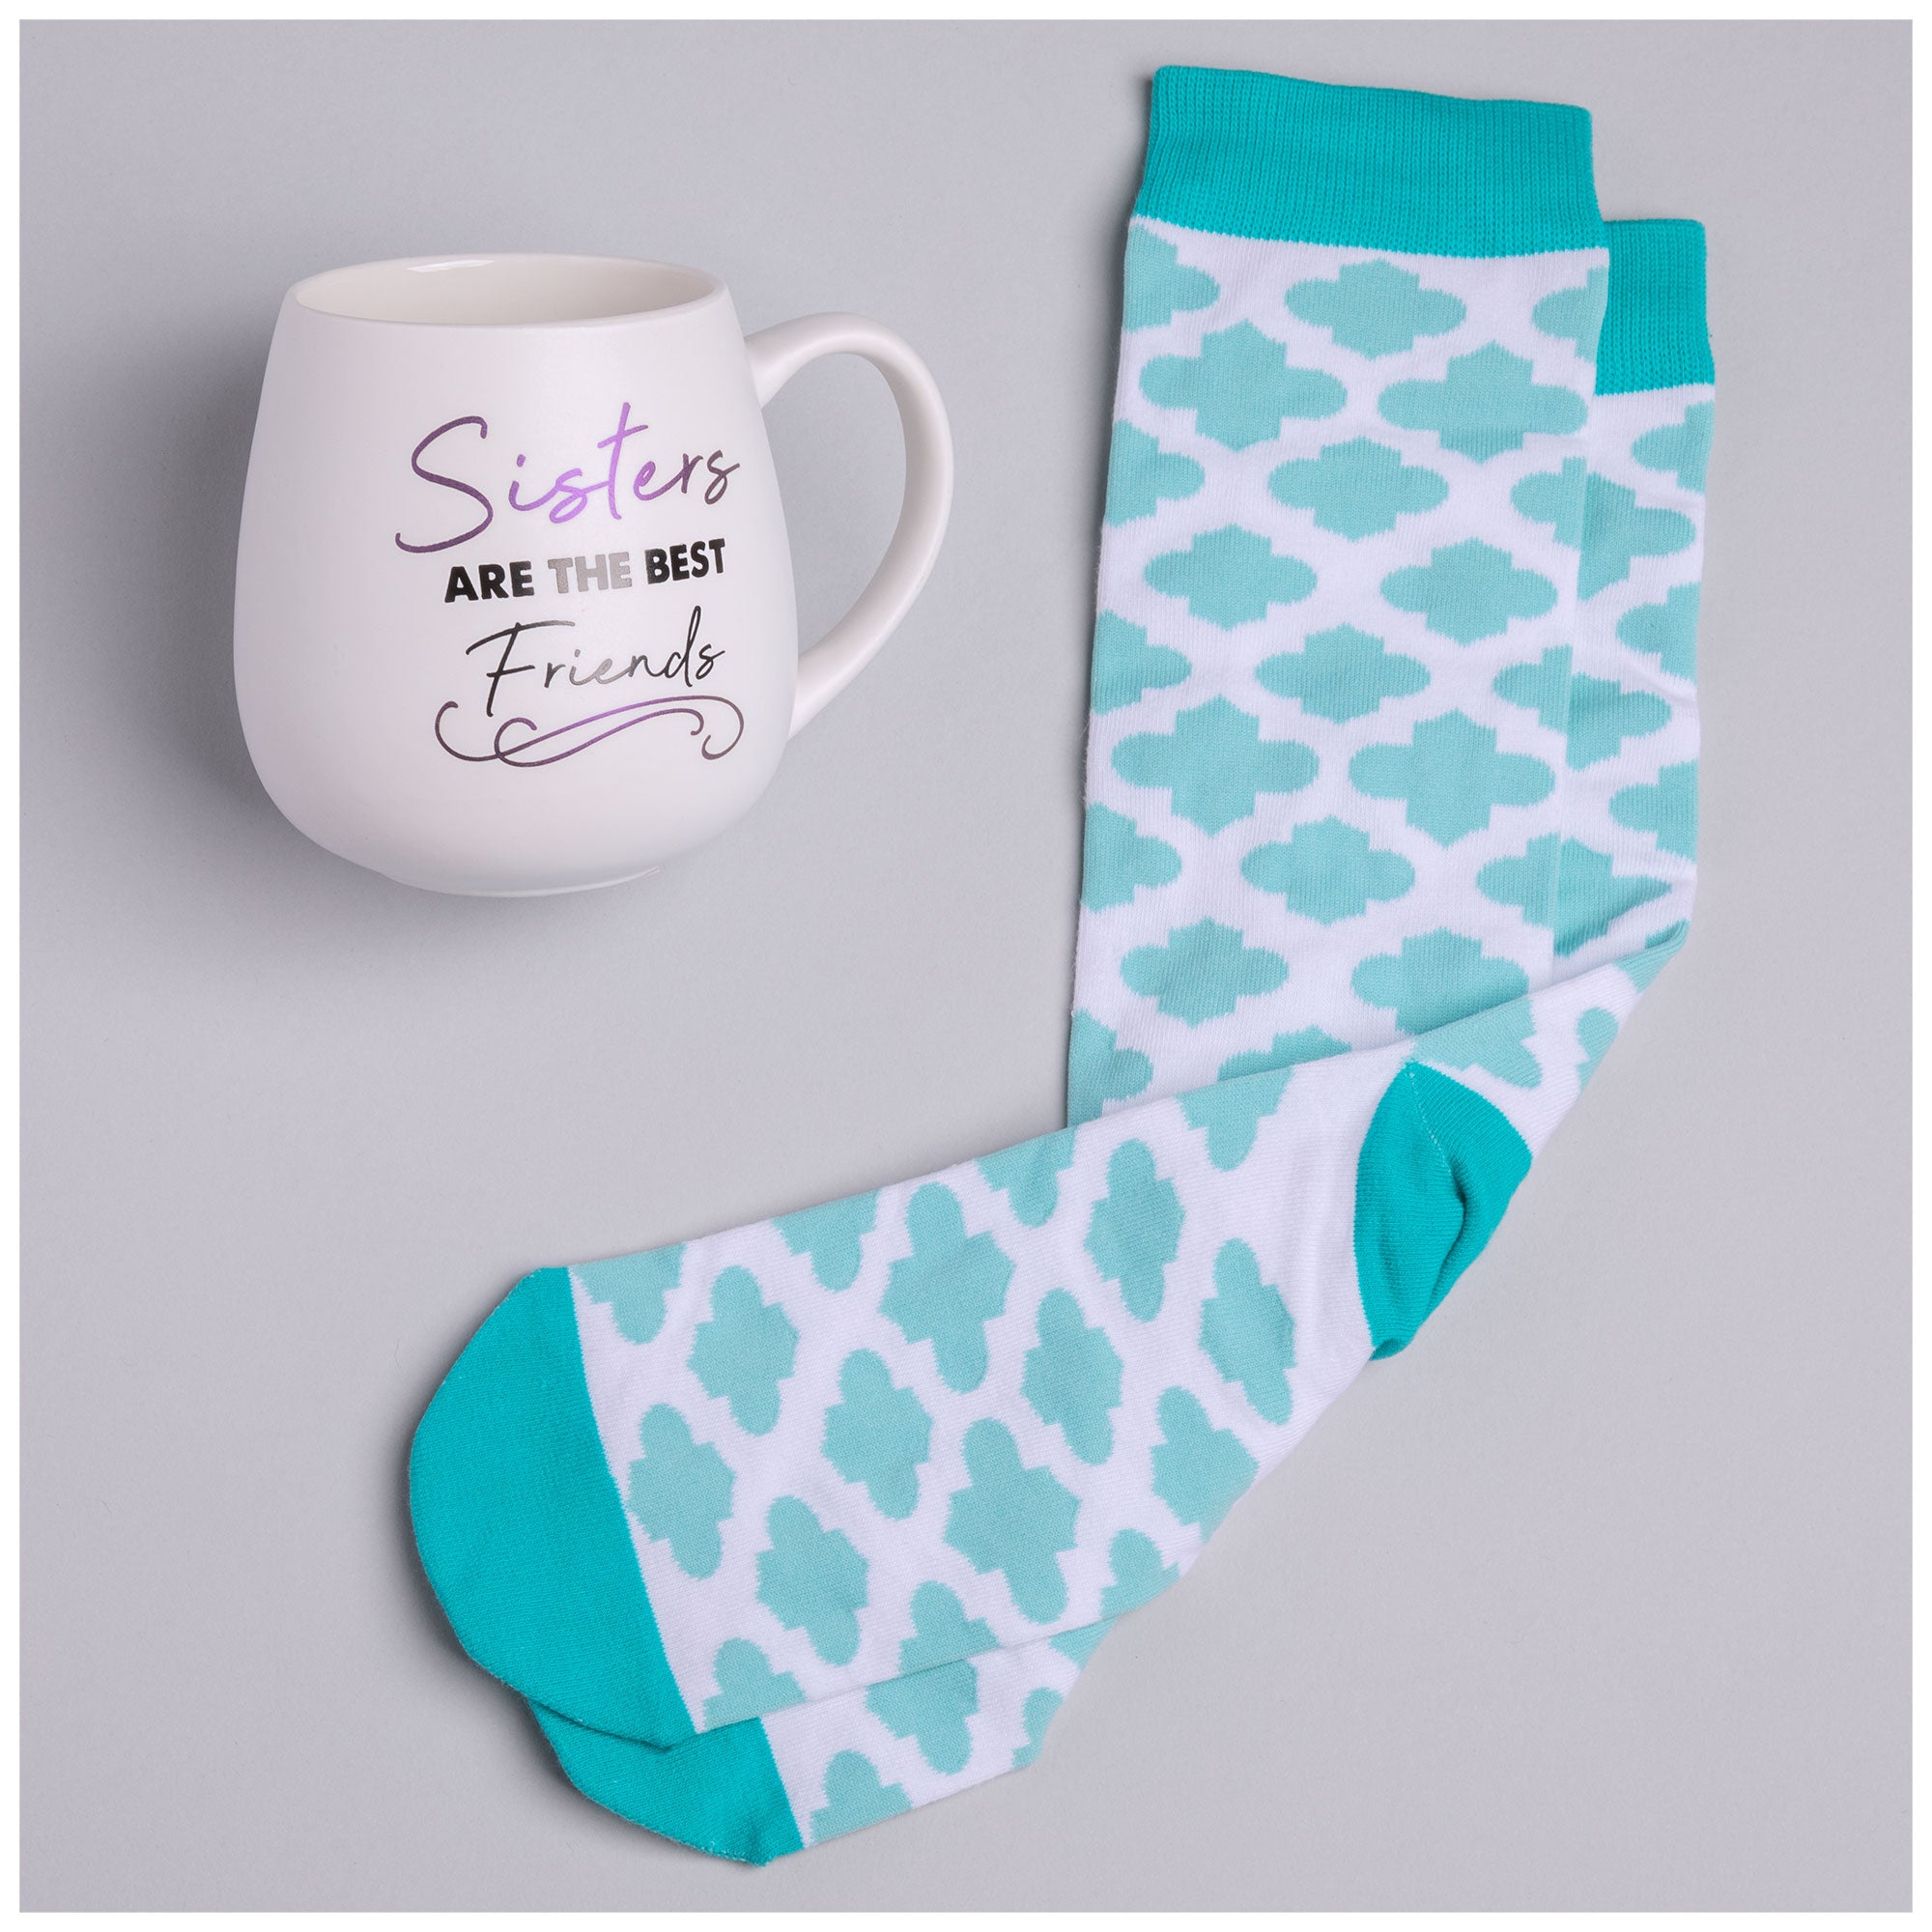 For The Perfect Person Mug & Sock Gift Set - Sister